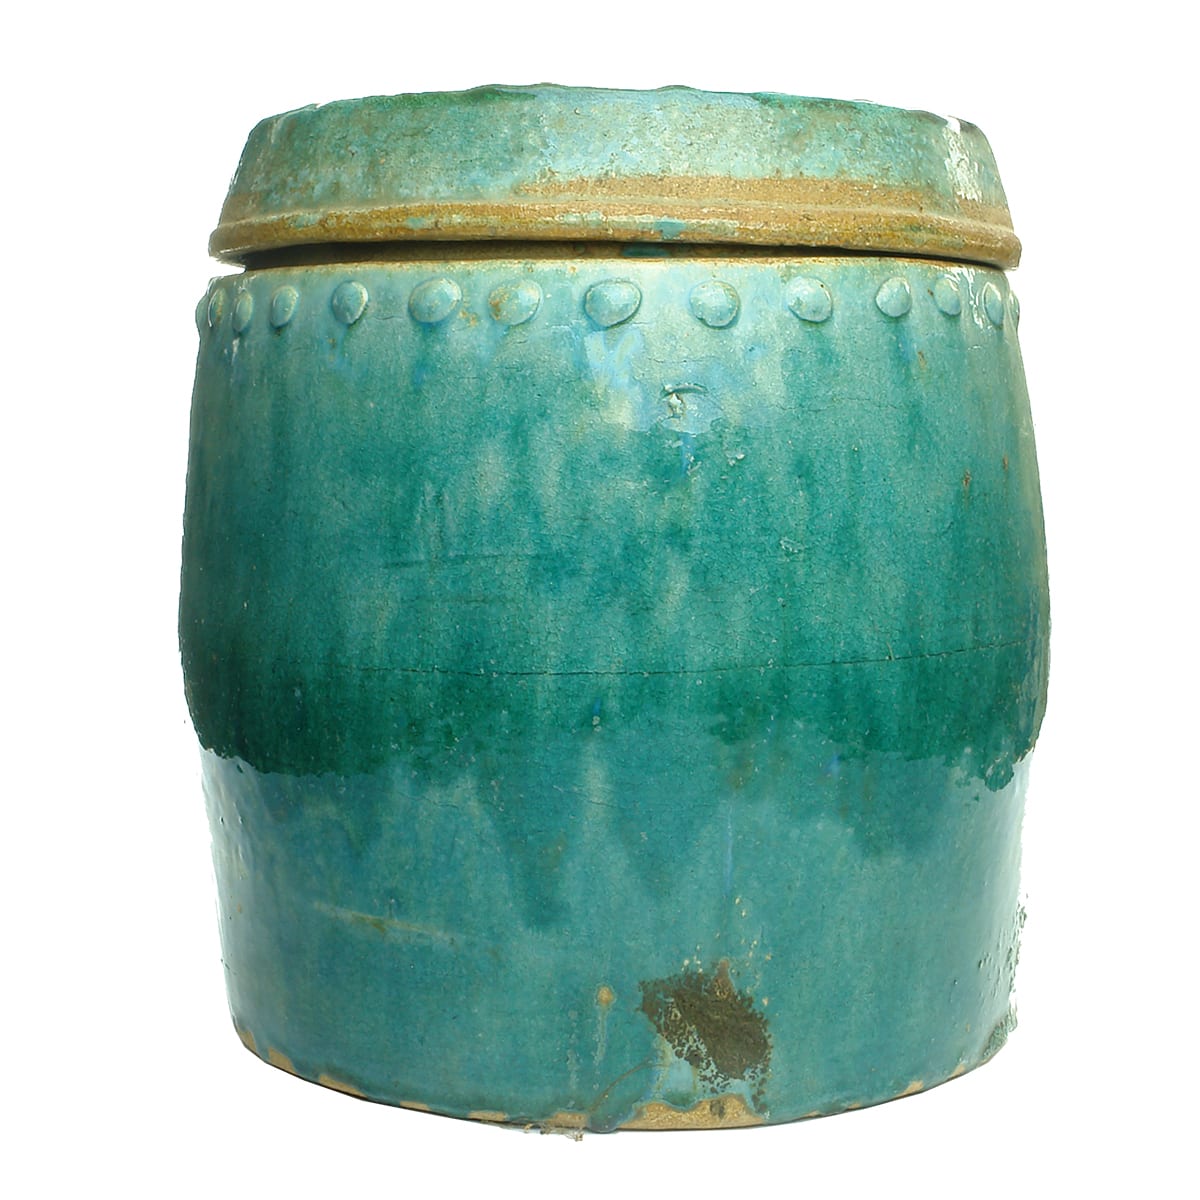 Chinese. Large green lidded storage jar.